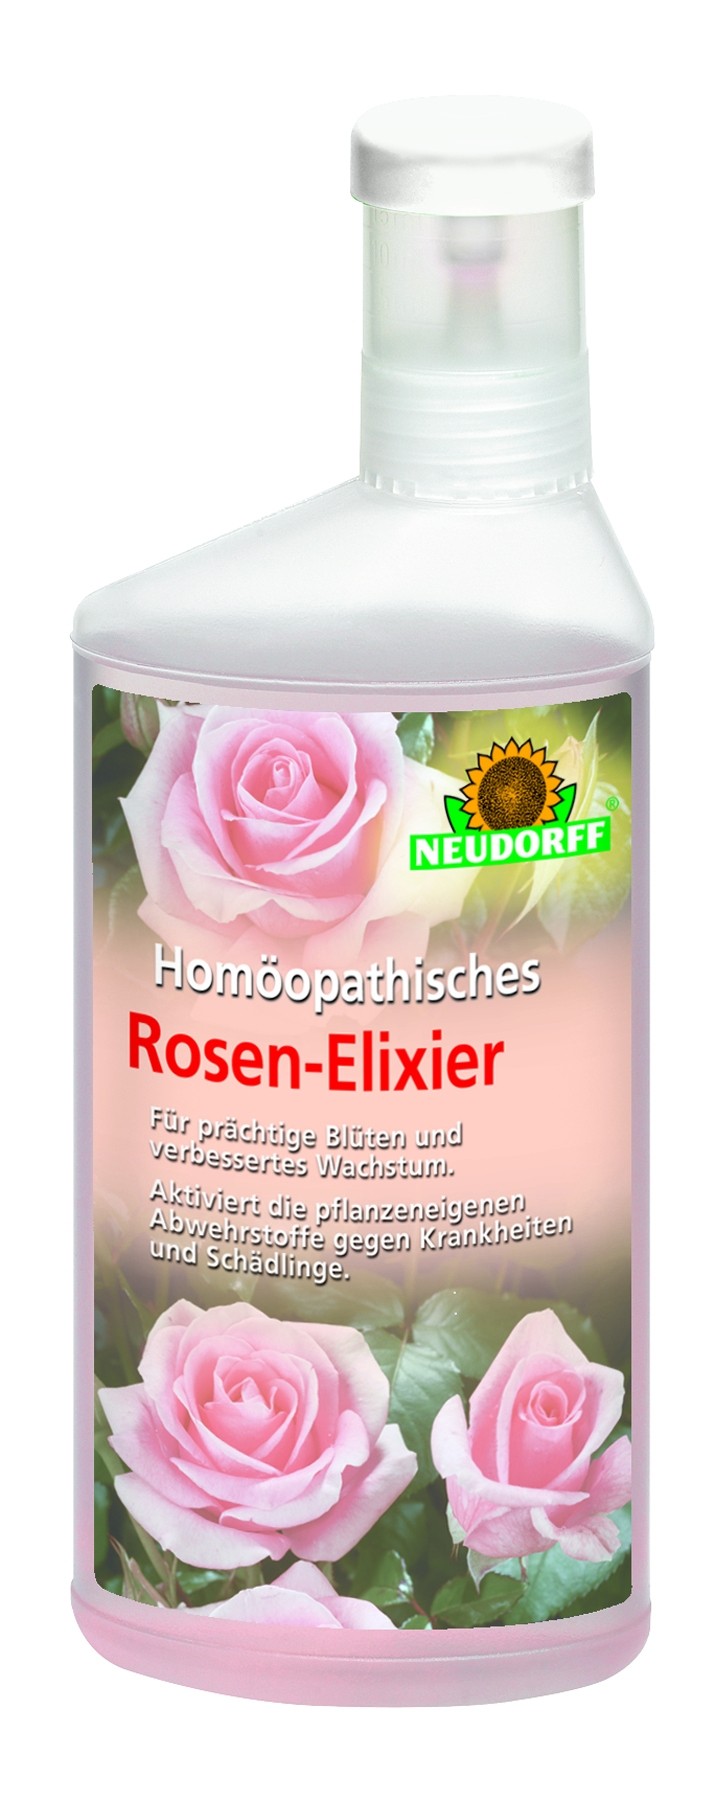 Neudorff Rosen-Elixier